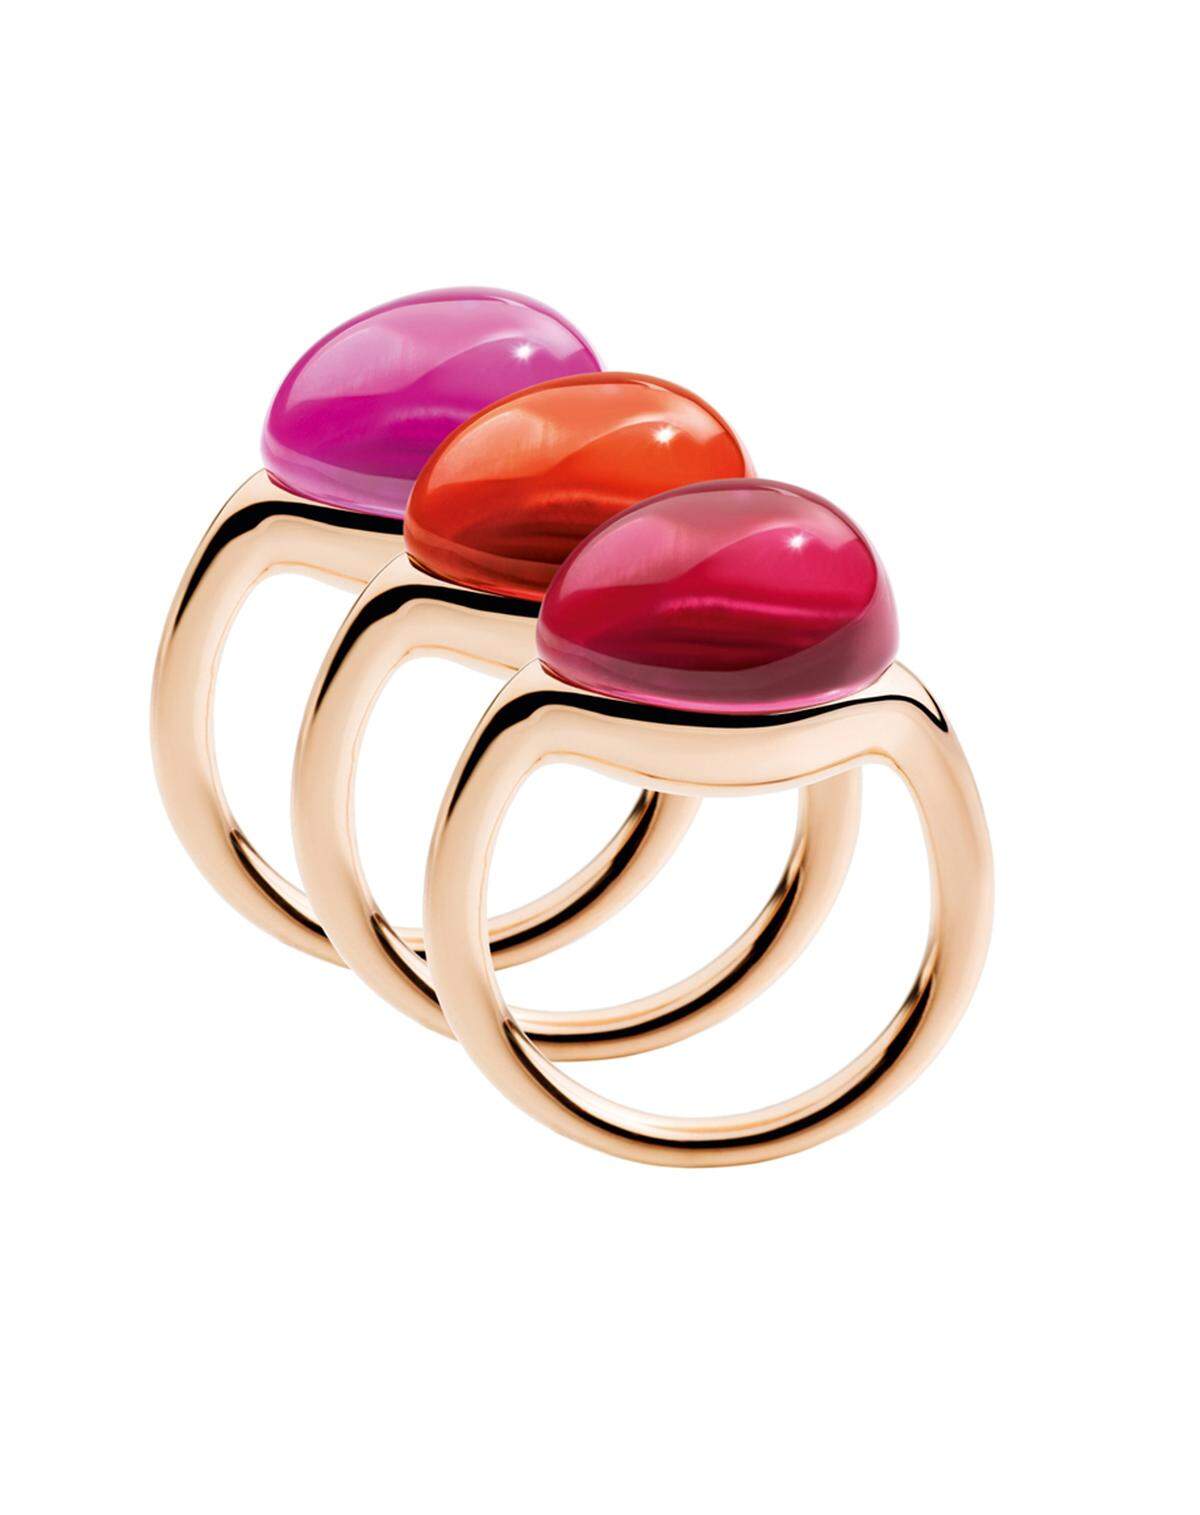 Feurig: Ringe in drei Rotnuancen aus der neuen "Rouge Passion" Capsule Collection von Pomellato.